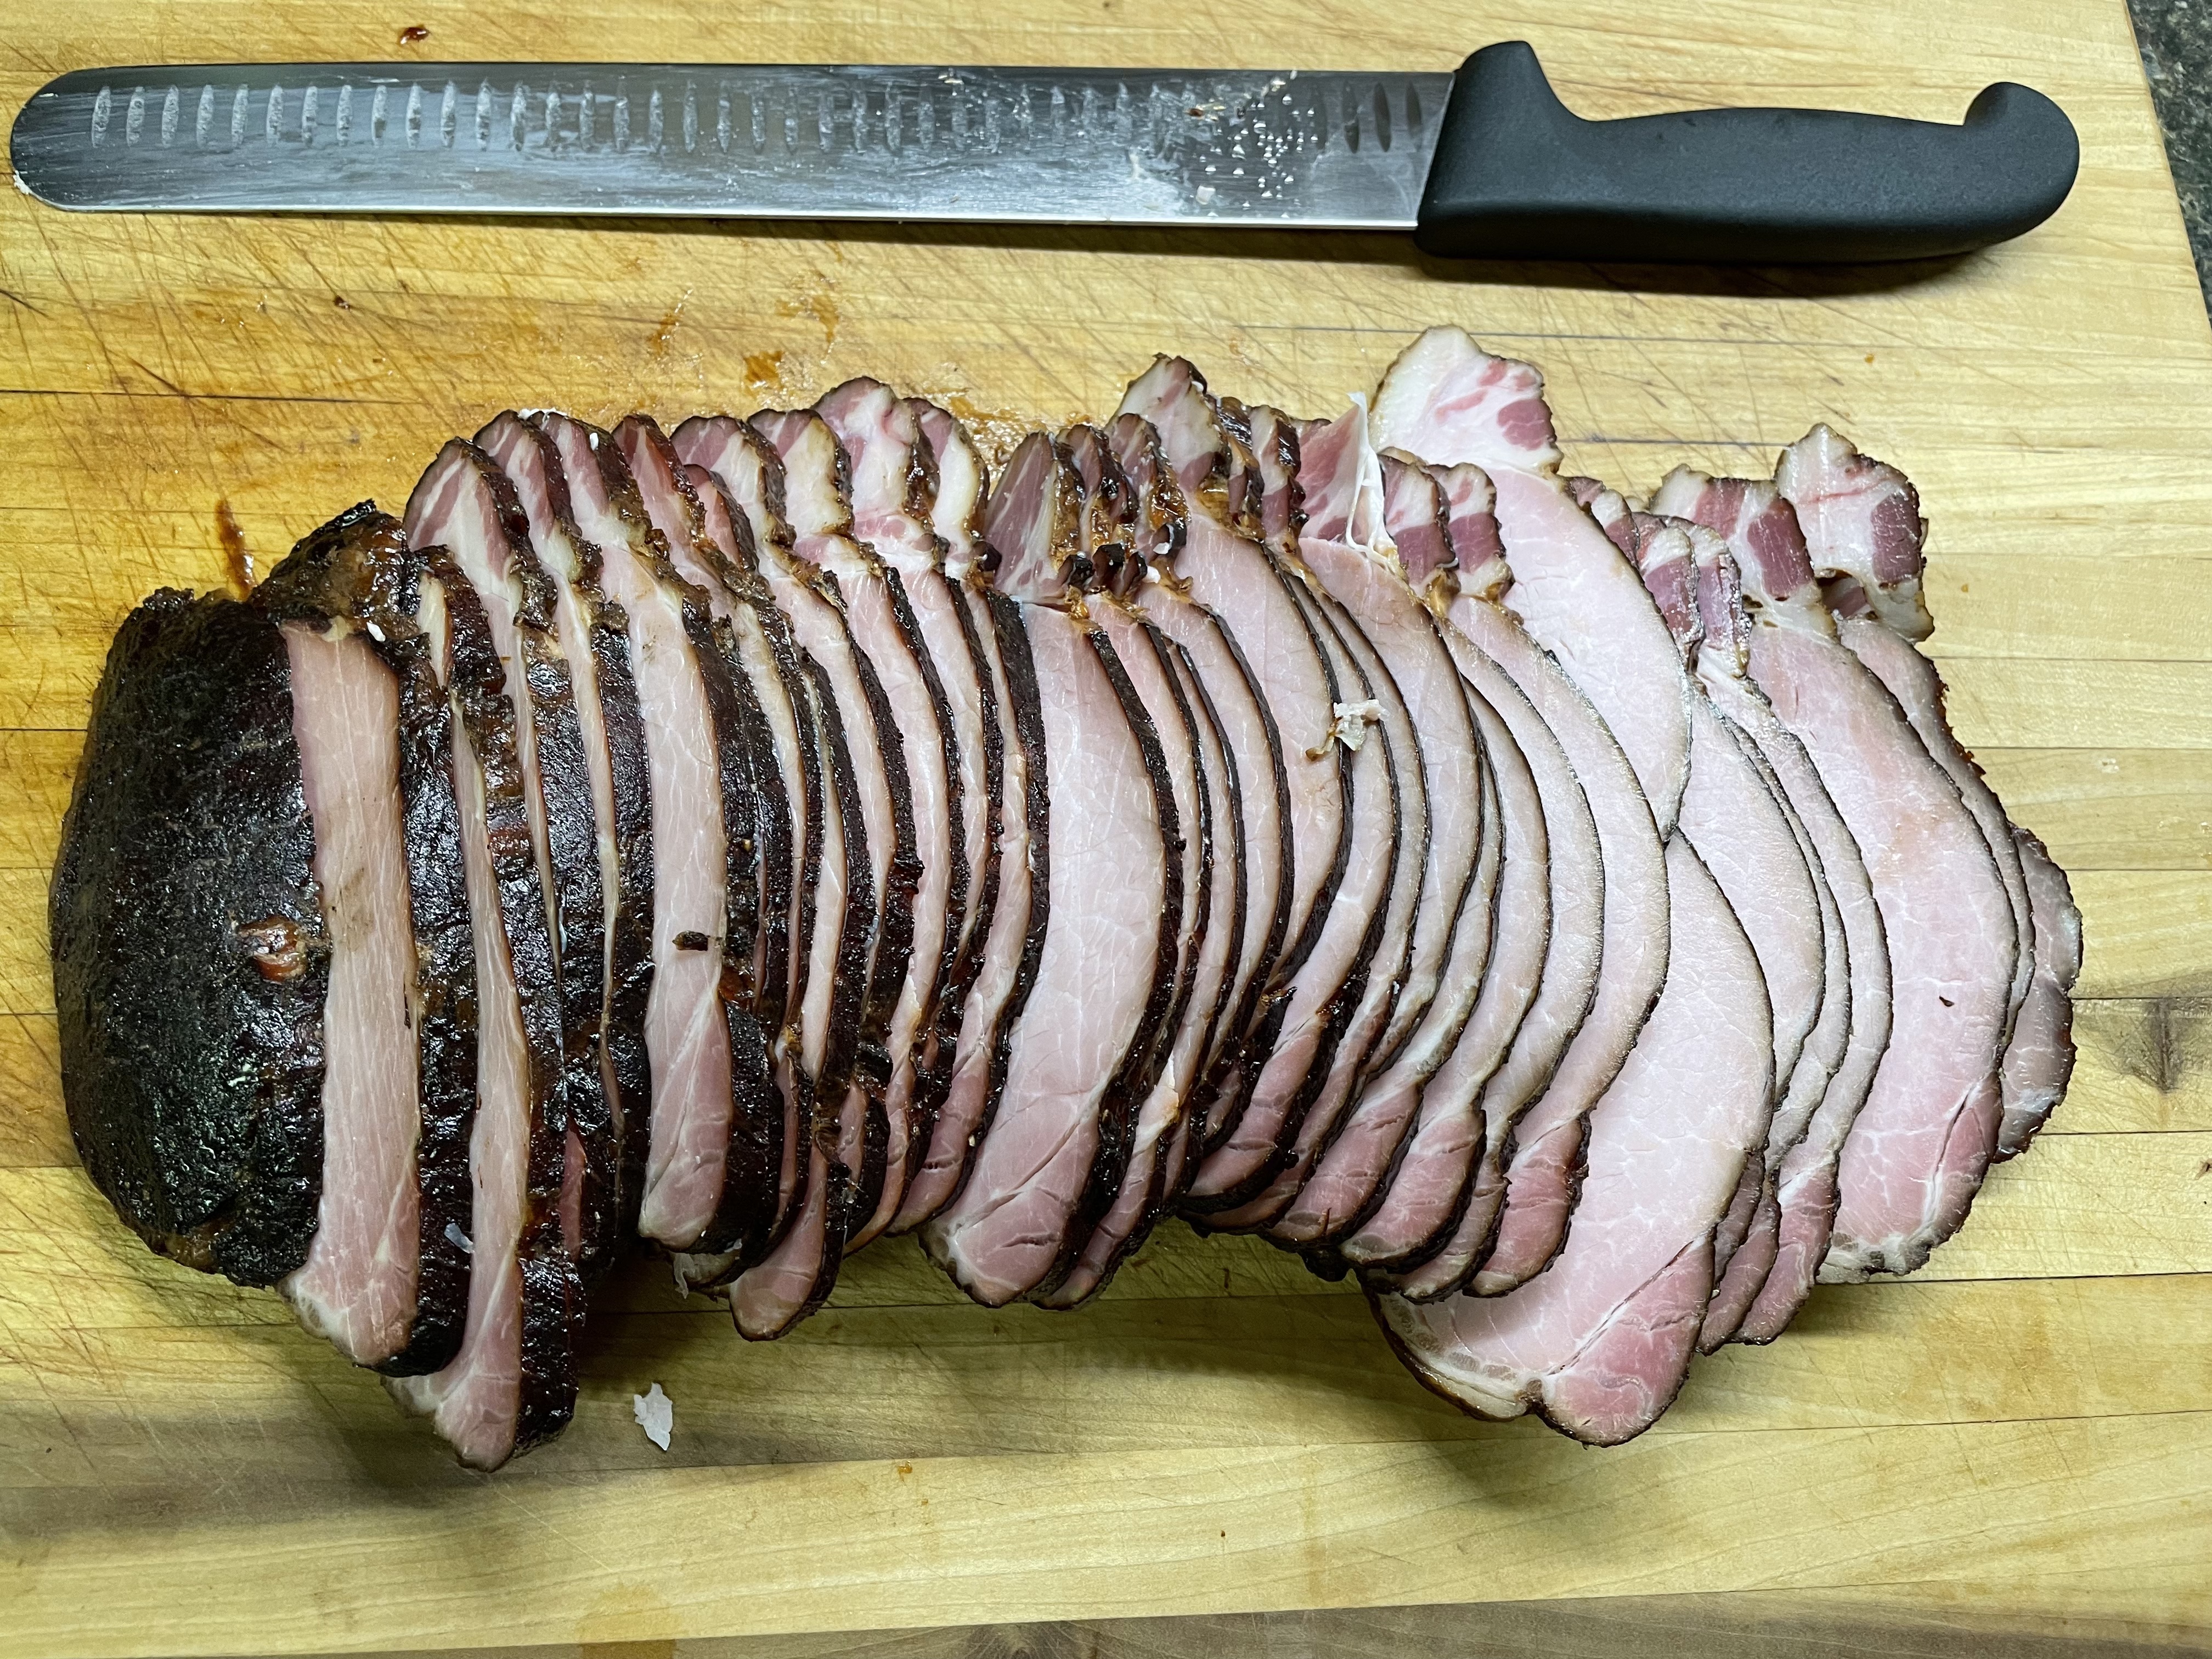 How to make buckboard bacon from a pork butt – Jess Pryles